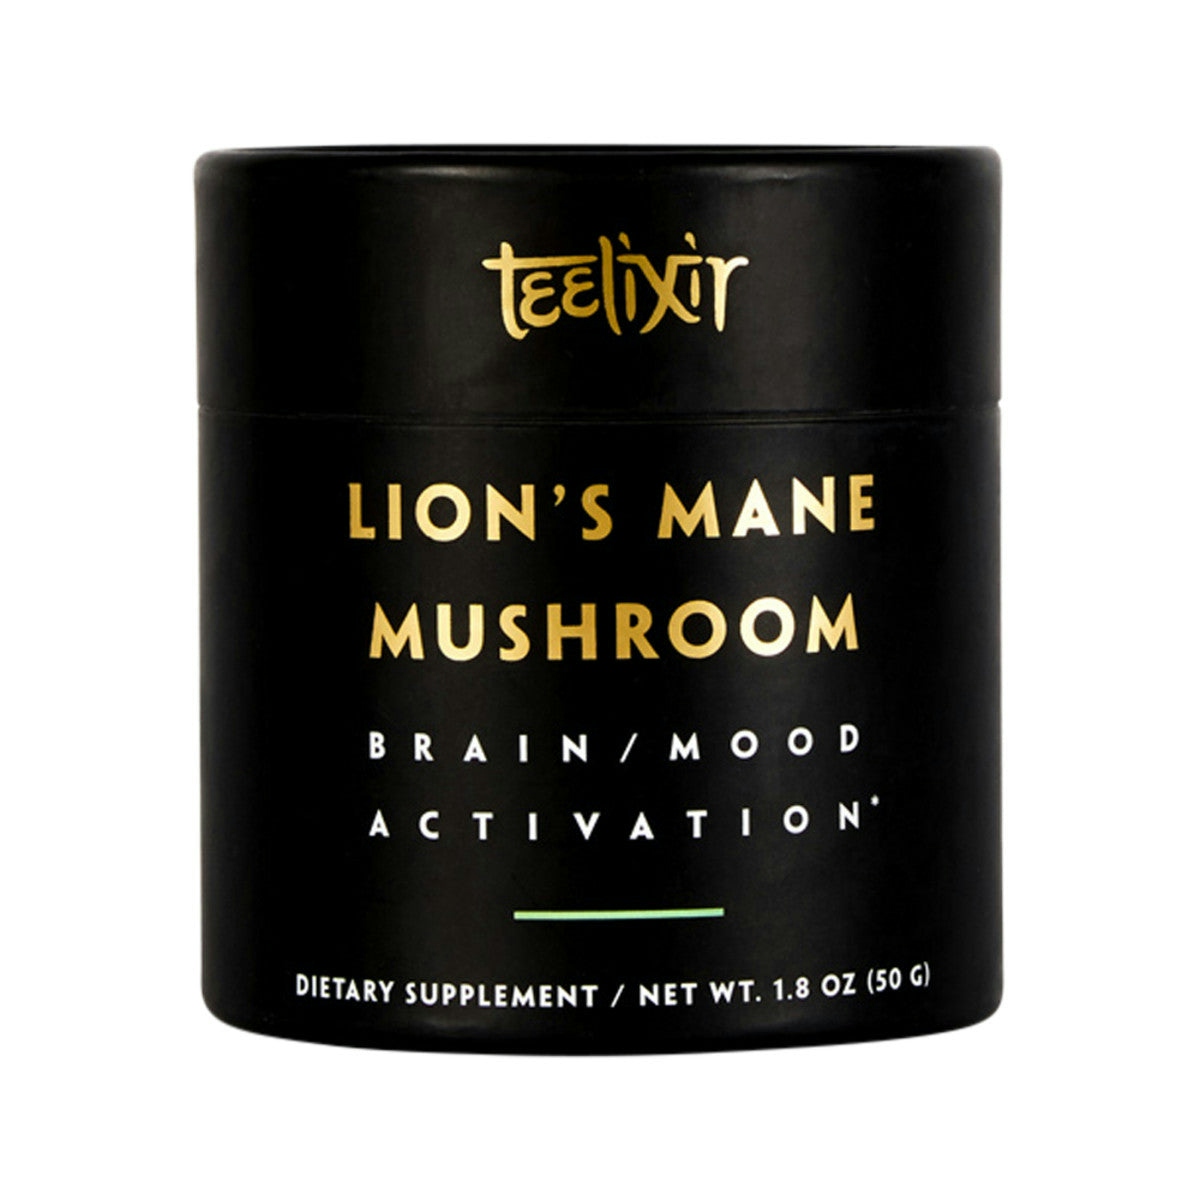 image of Teelixir Organic Lion's Mane Mushroom (Brain/Mood Activation) 50g on white background